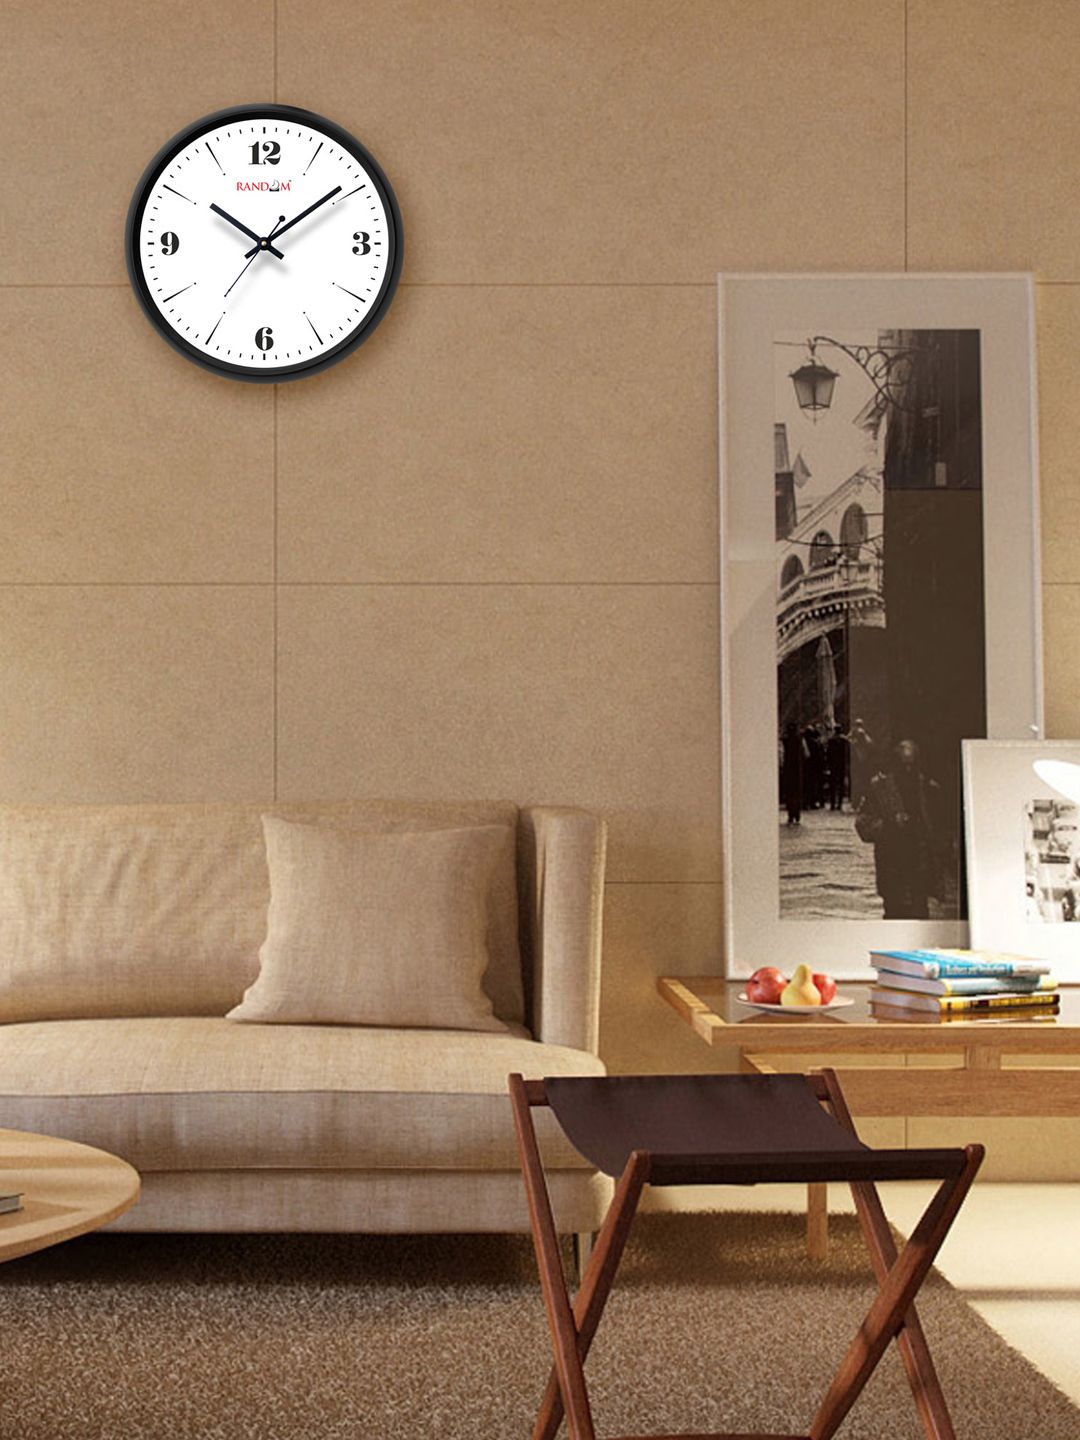 RANDOM White & Black Round 30 cm Analogue Wall Clock Price in India